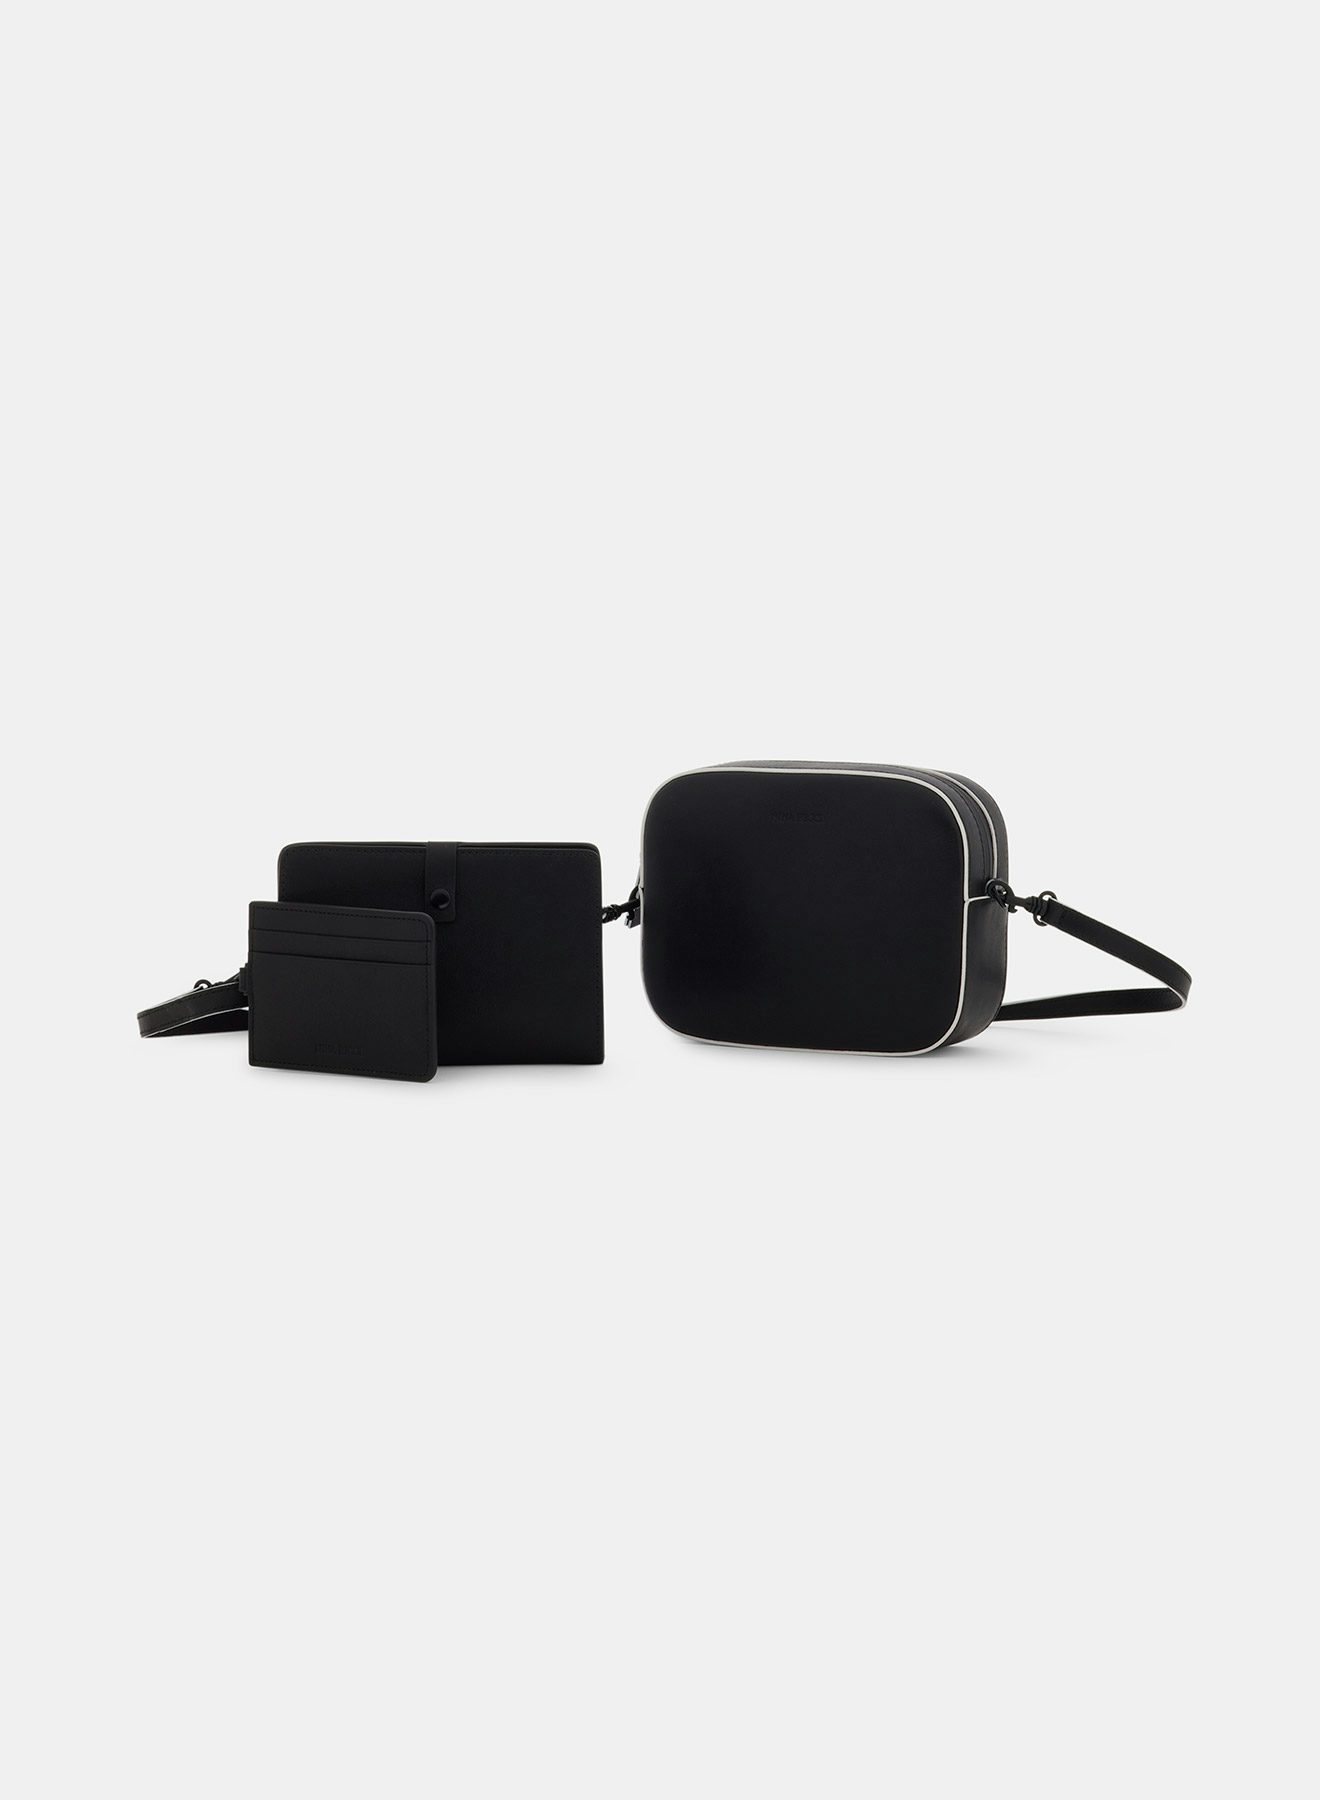 Black Leather Camera Bag with Shoulder Strap - Nina Ricci